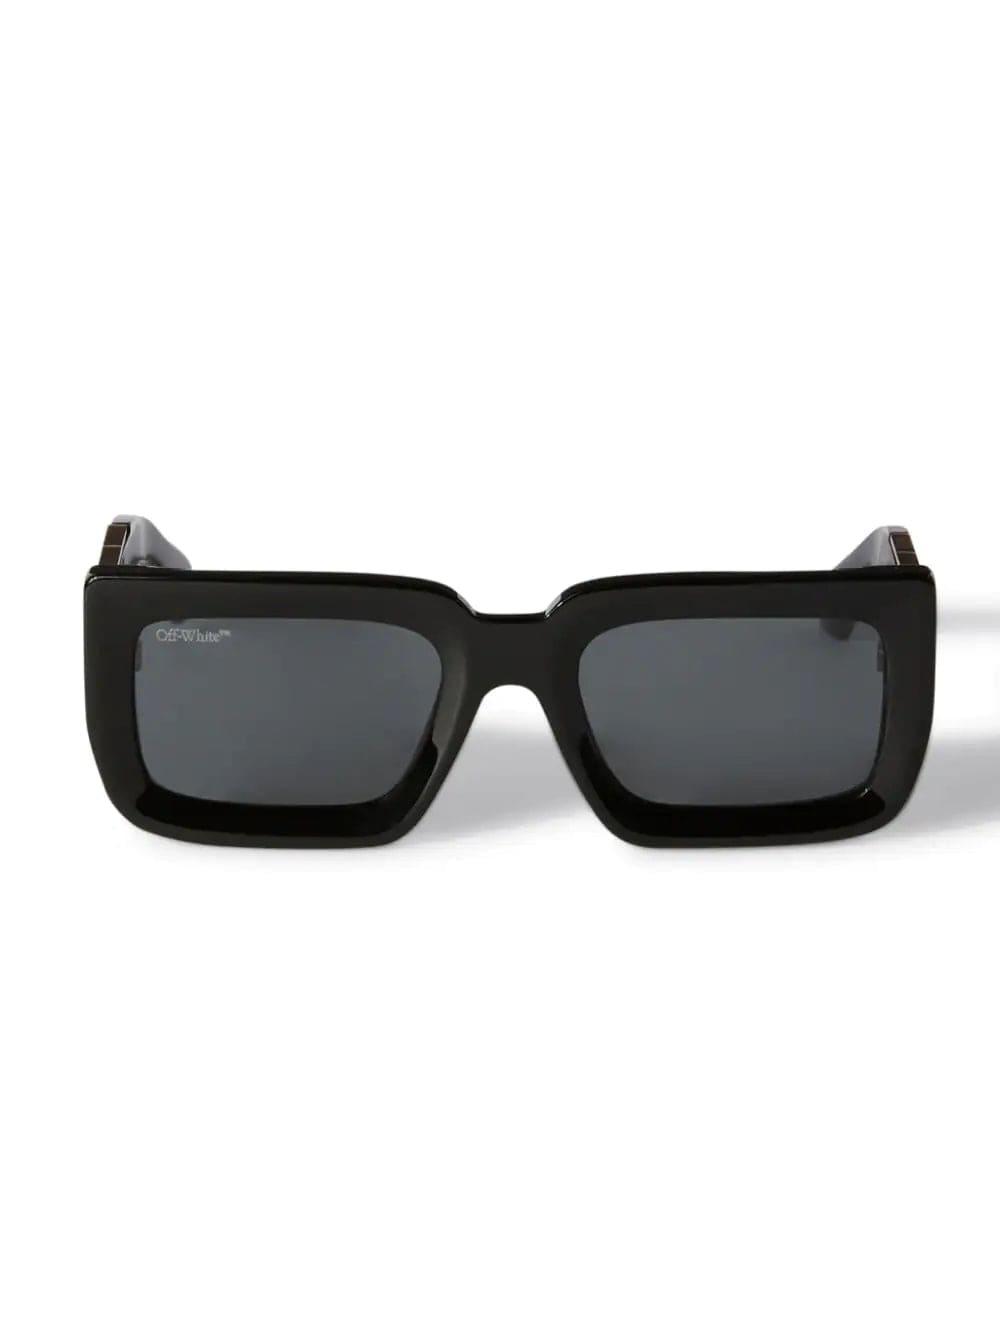 Off-White Boston: Rectangular sunglasses with dark gray lenses –   - eyewear store